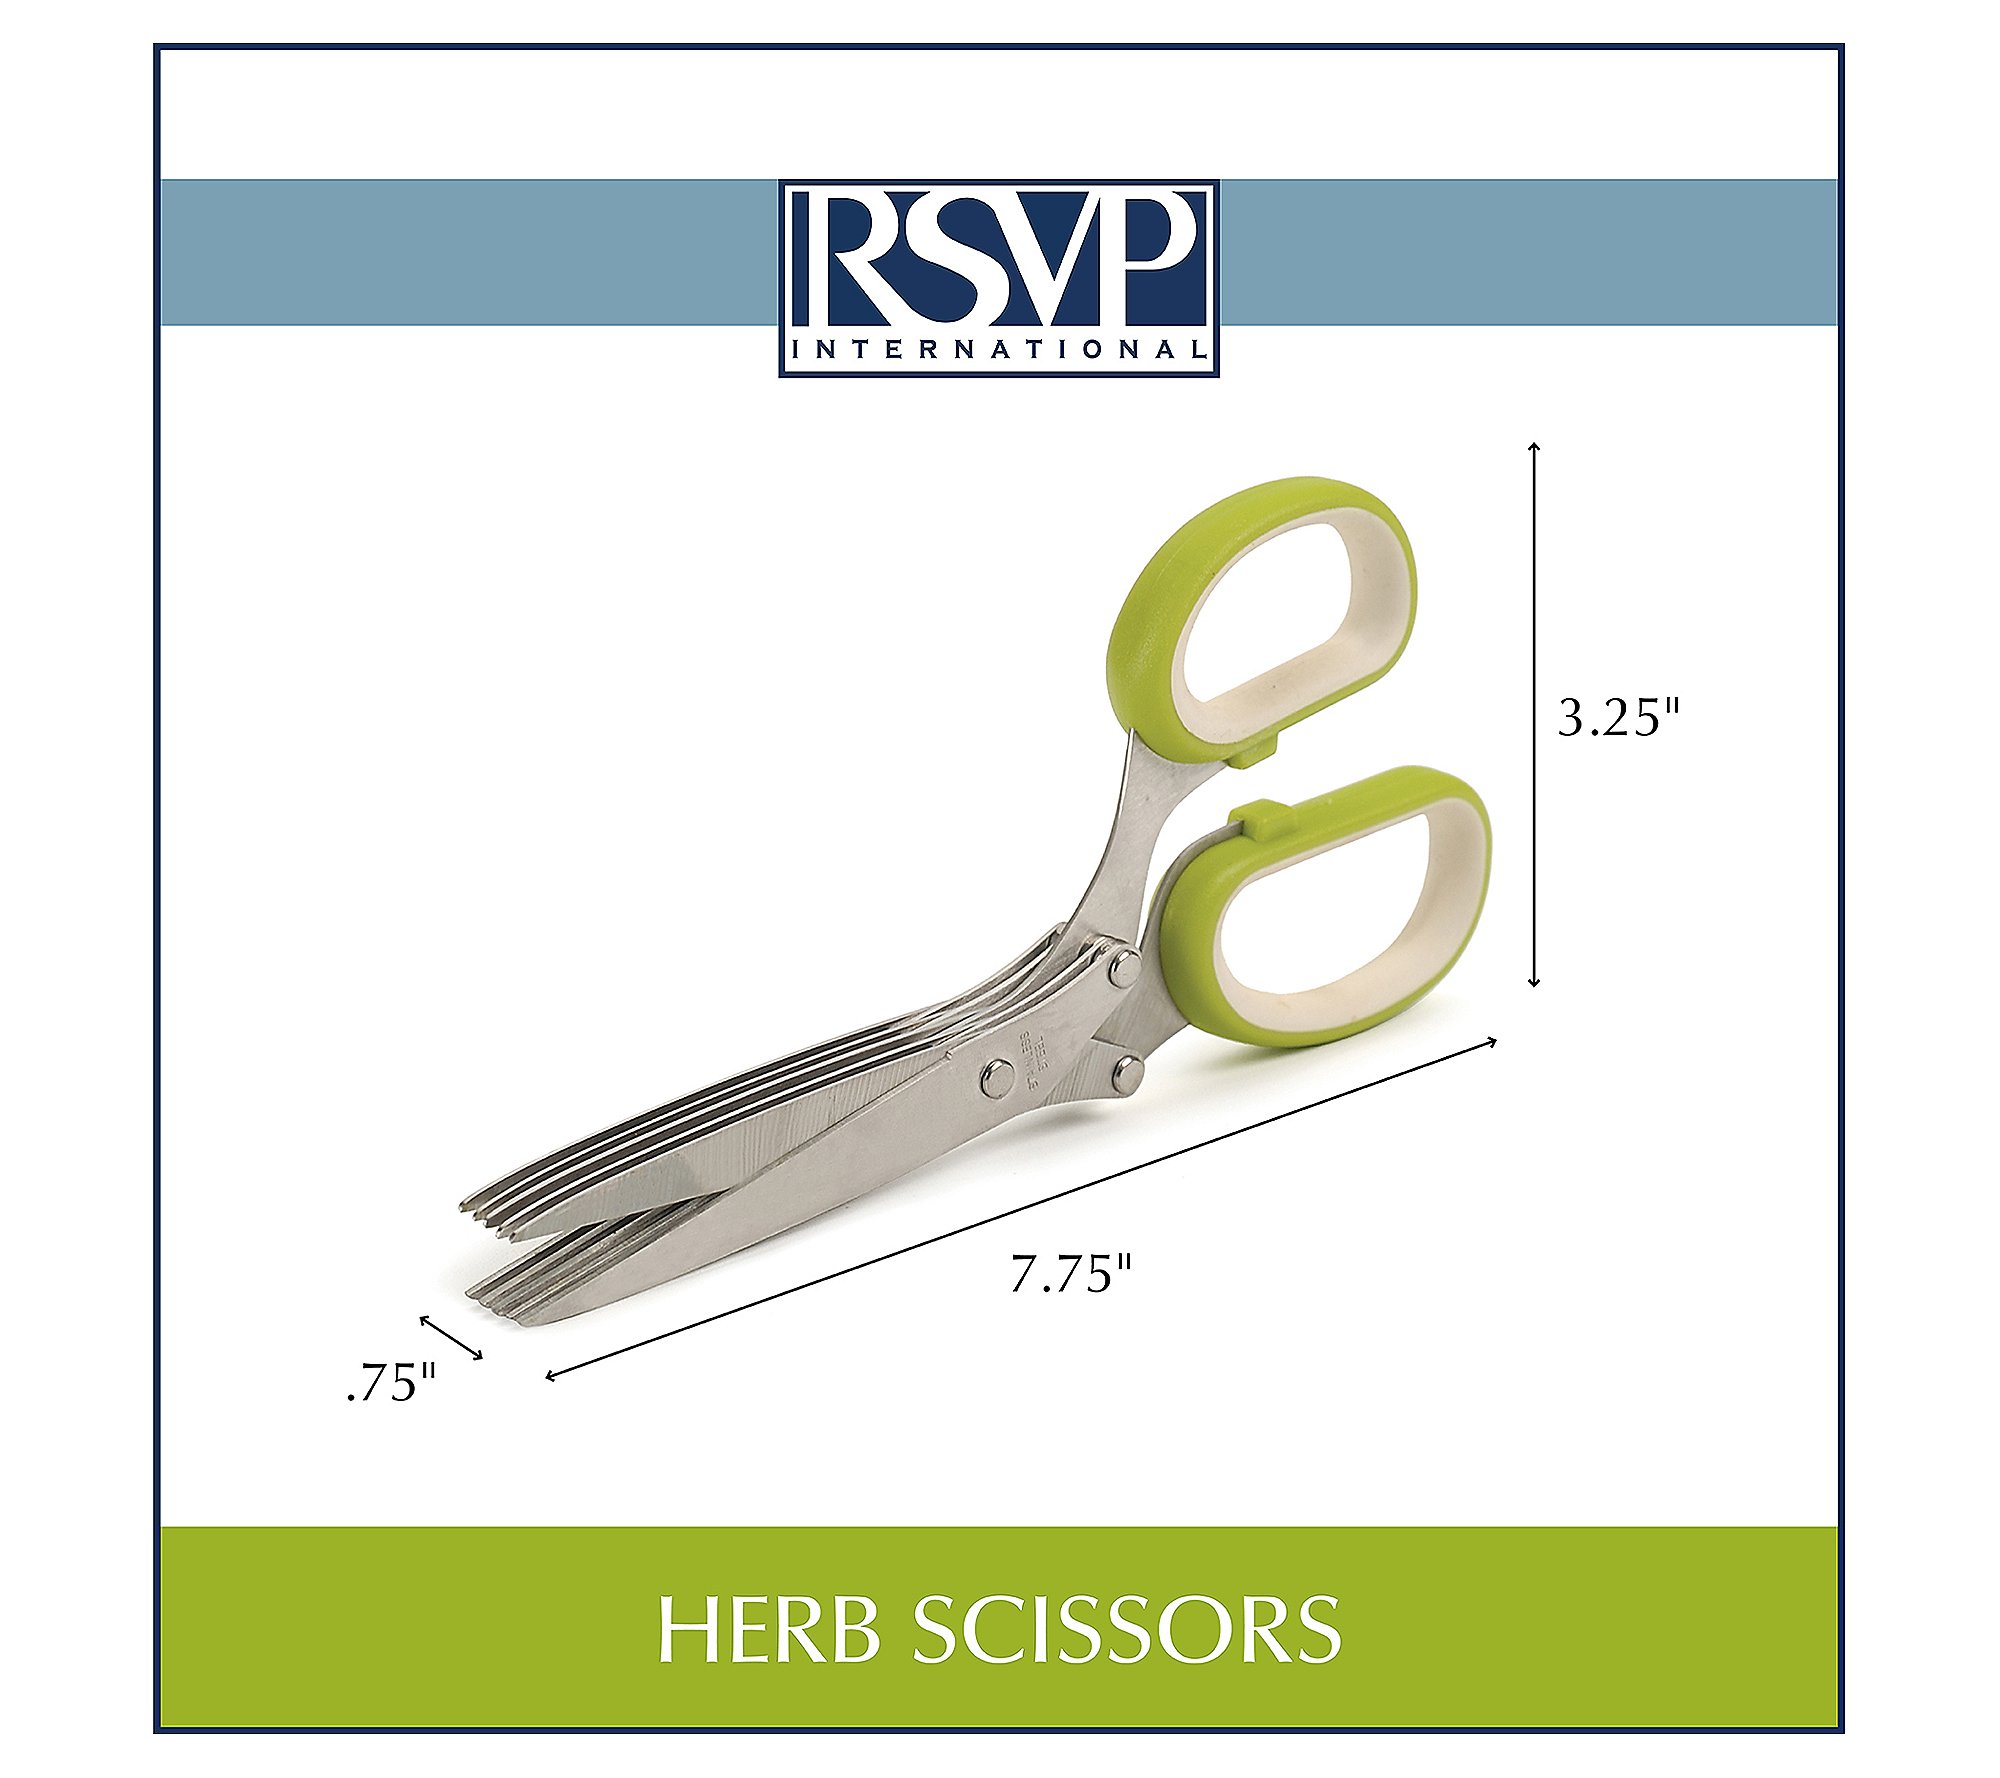 RSVP Stainless Steel Multi-Purpose Herb Scissor s